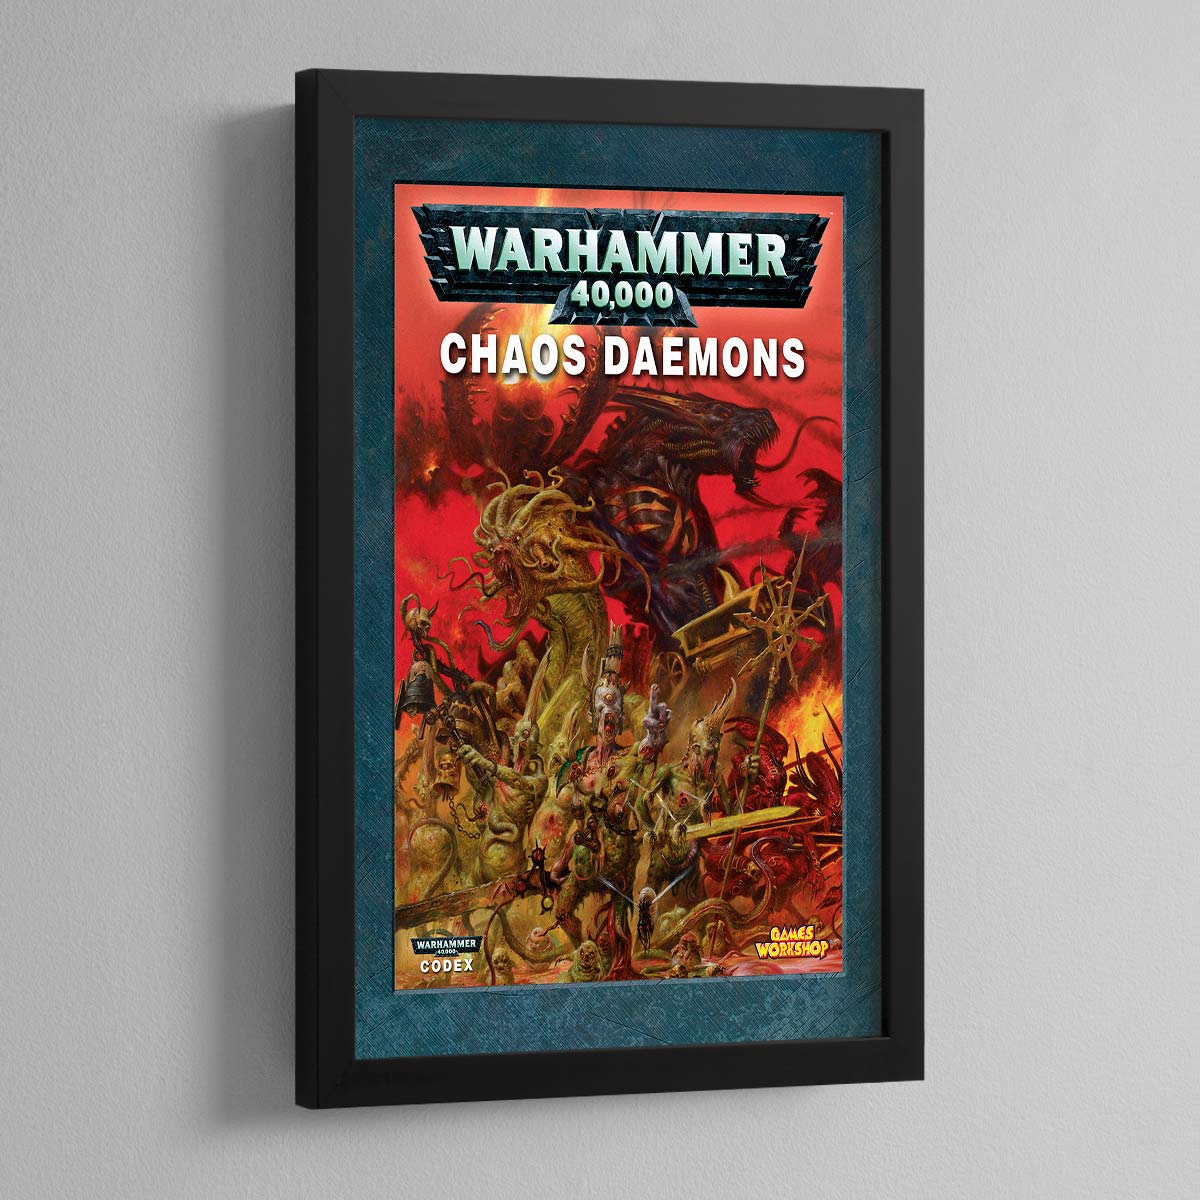 Warhammer 40,000 4th Edition – Chaos Daemons – Frame